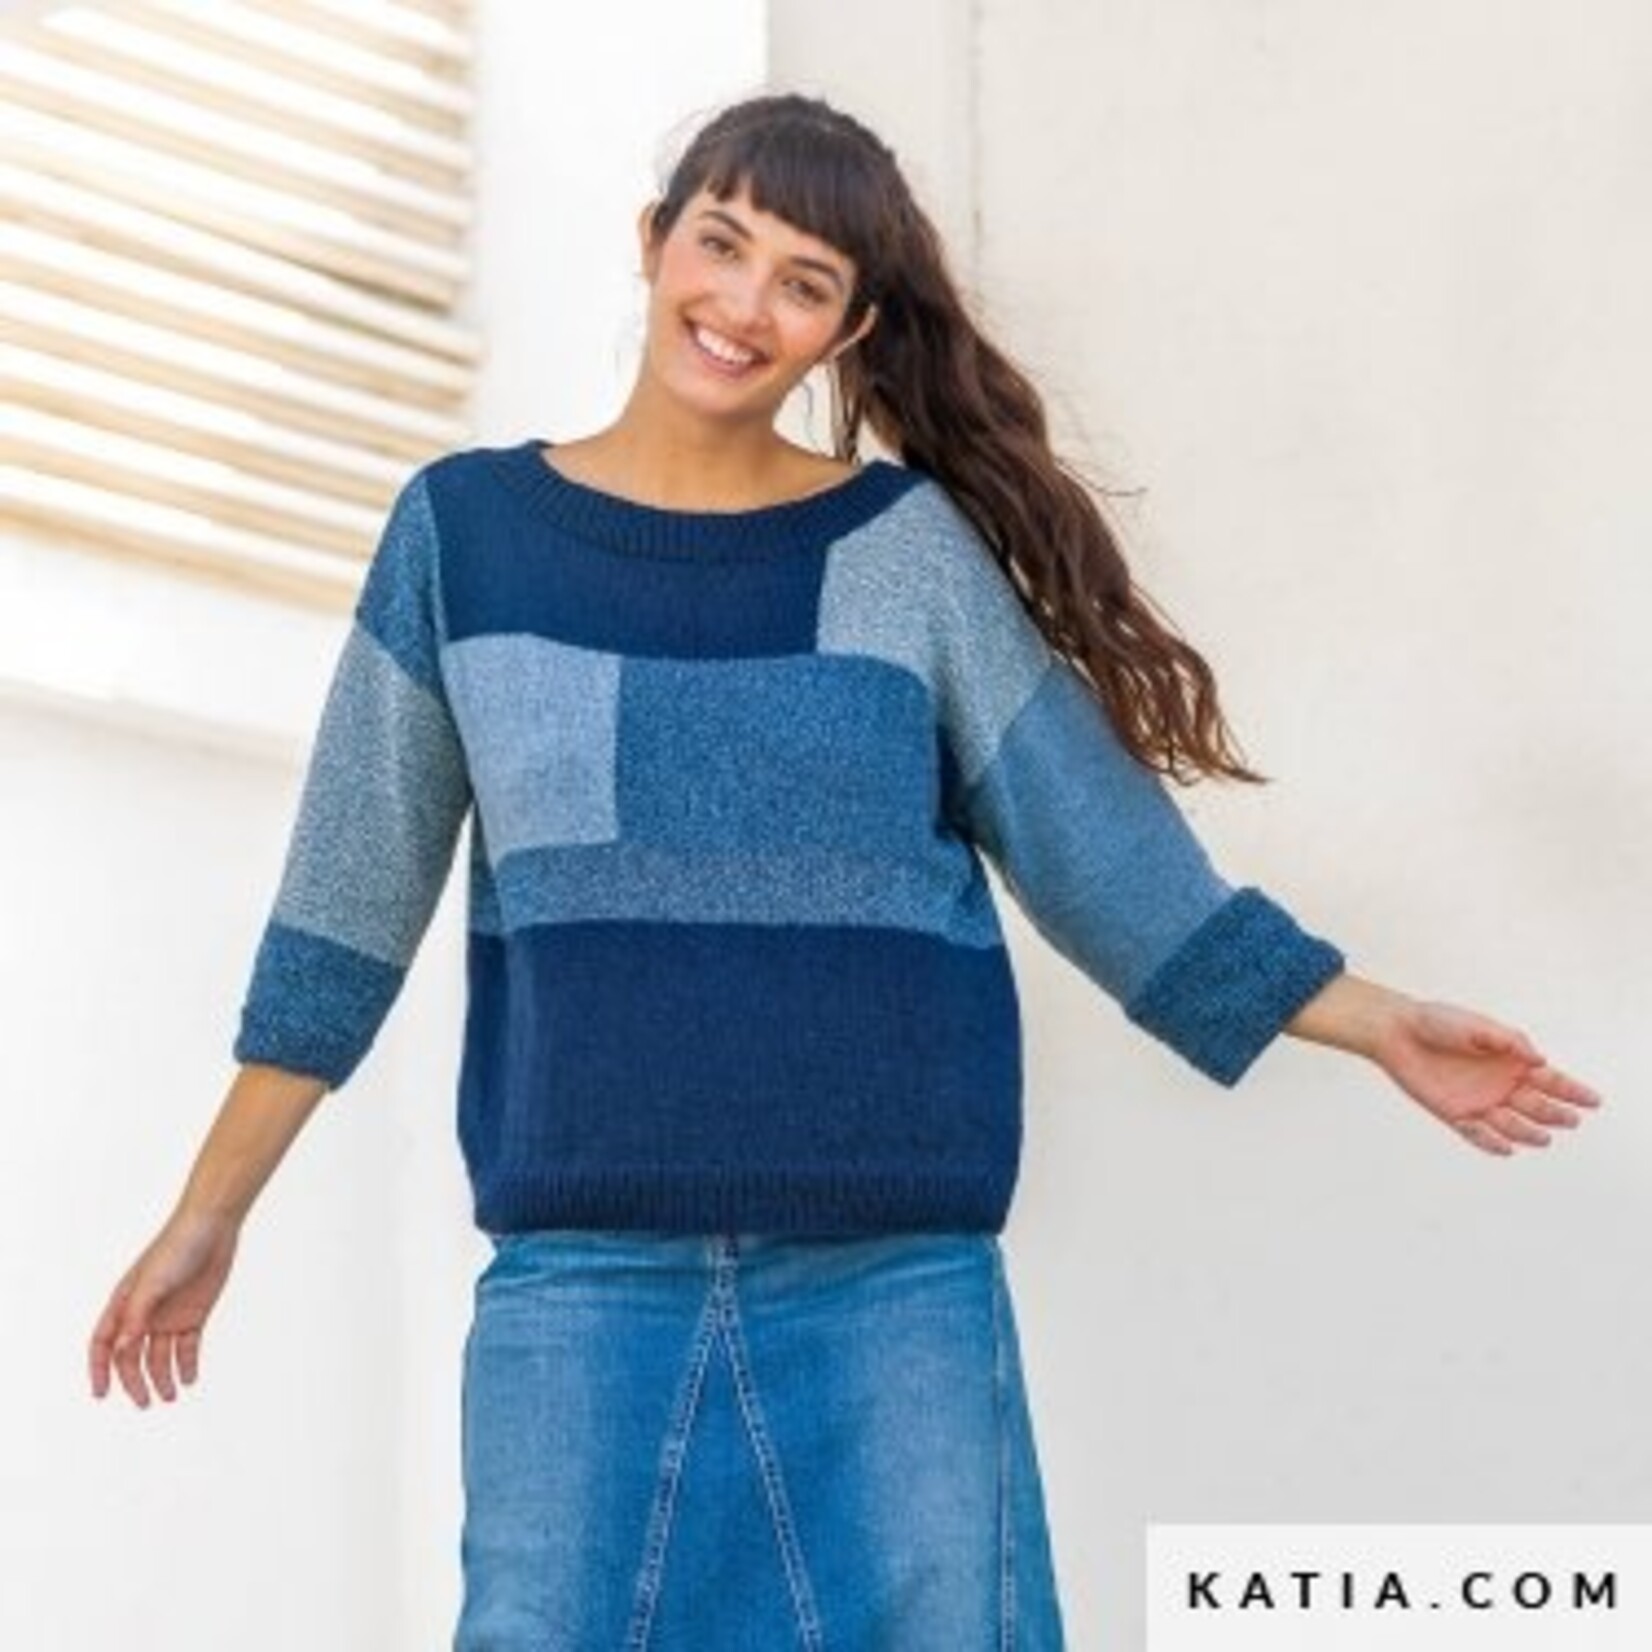 Katia Blue Jeans I 100  Jeans-Briljantblauw